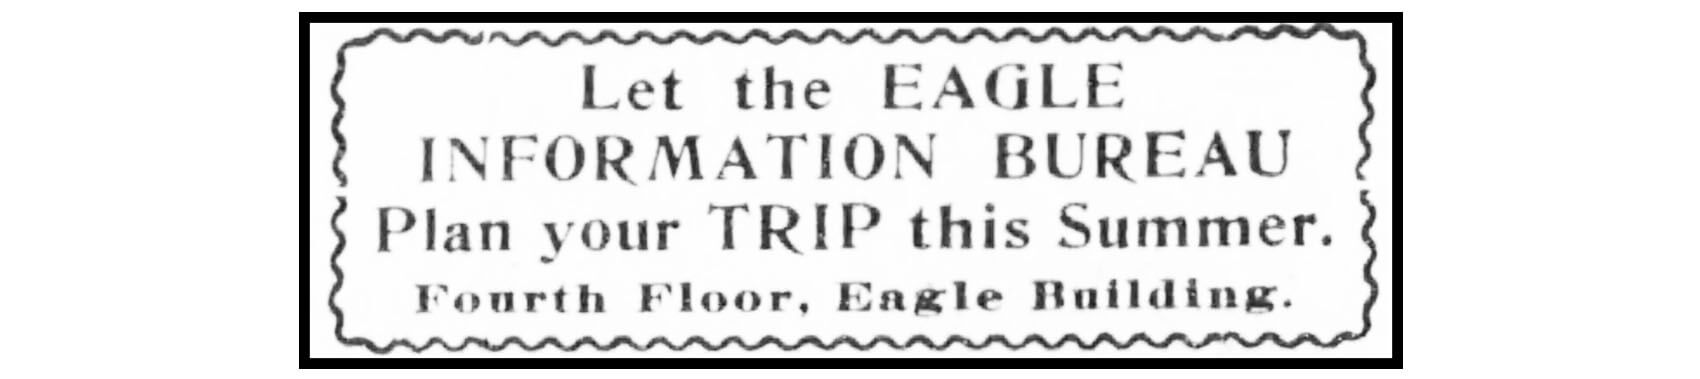 upstate new york vacation brooklyn eagle history hudson river valley 